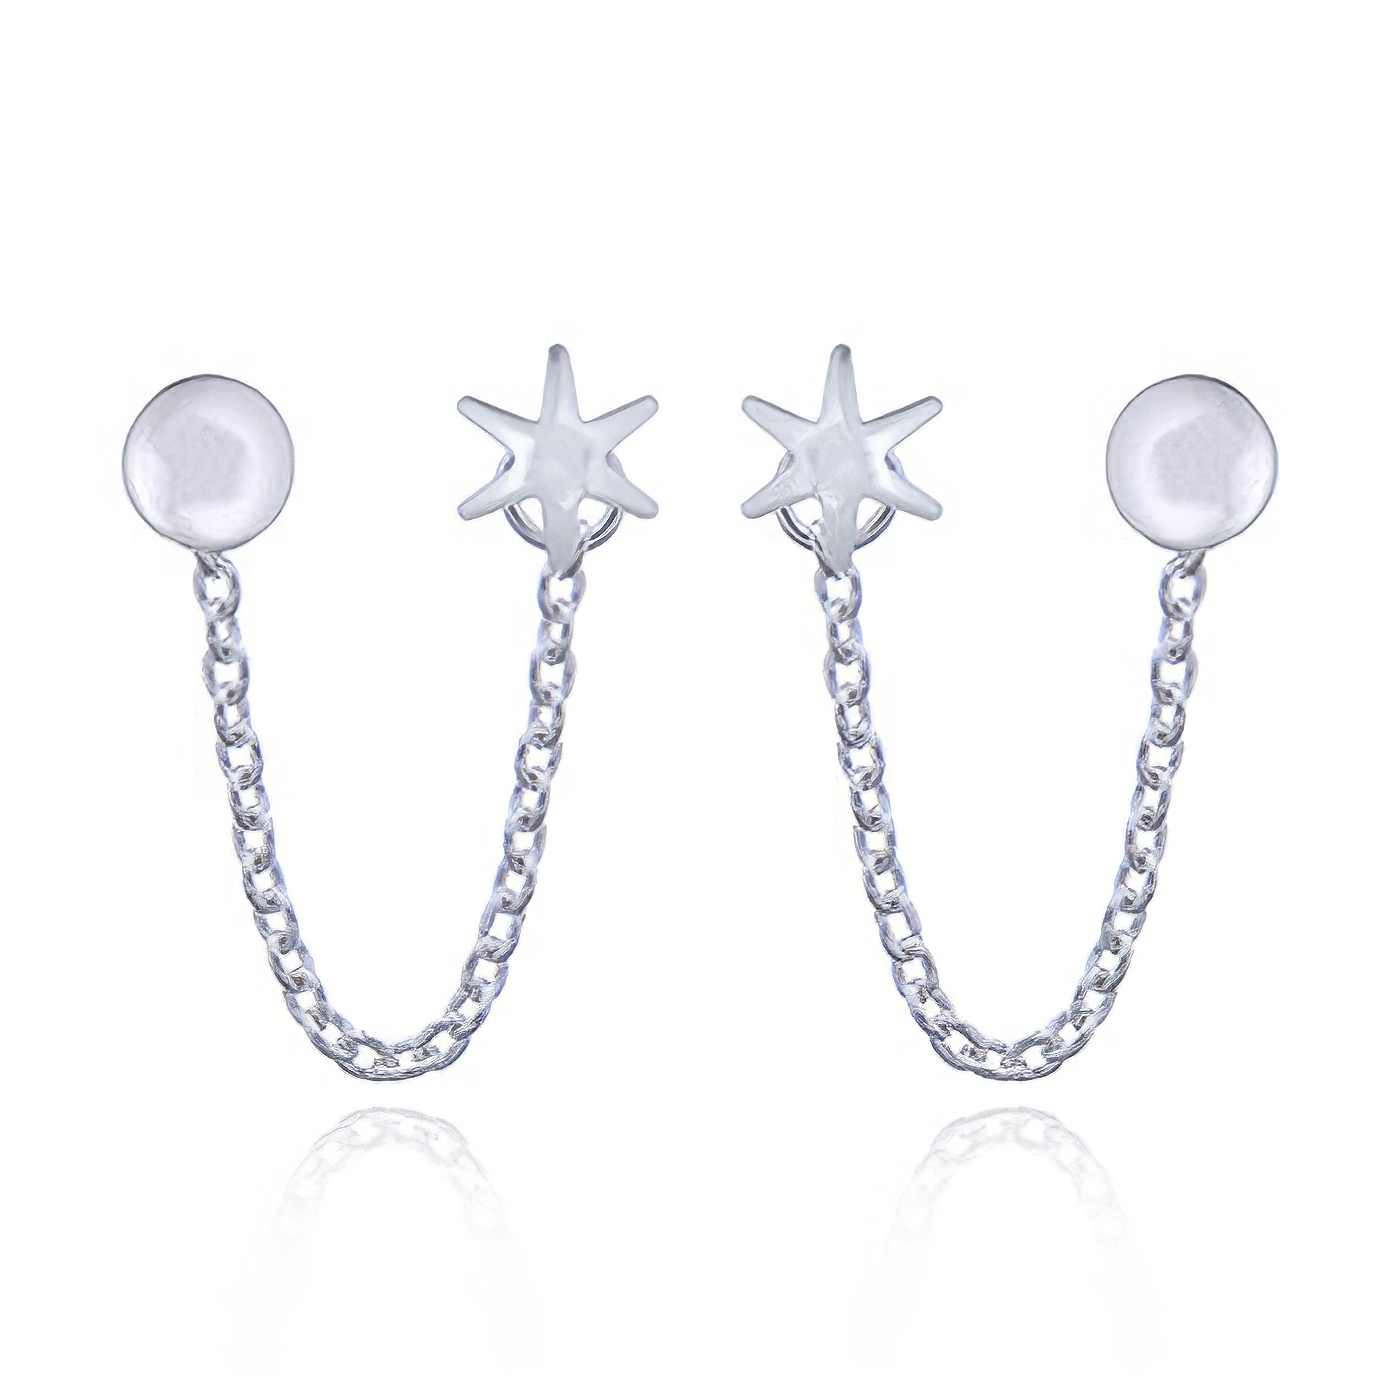 Double Stud Full Moon and Star 925 Earrings by BeYindi 